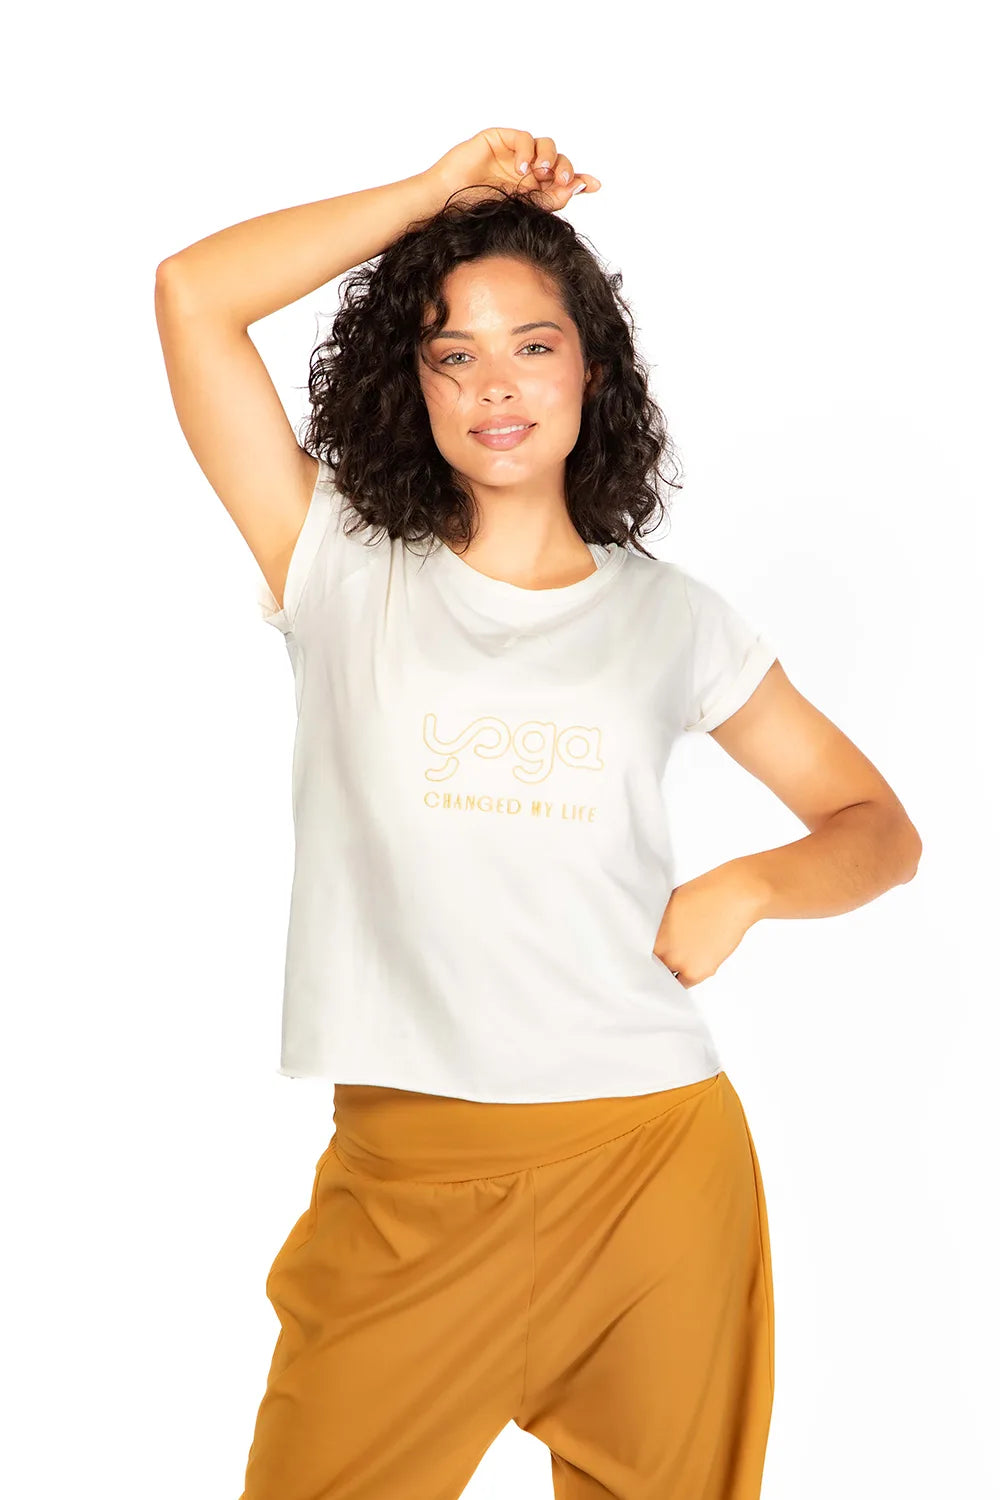 Camiseta Tshirt Yoga Changed, modelo básico en color blanco Coconut Milk de Yogimi. Camiseta manga corta homenaje a amantes del yoga. Bordada con la frase &quot;Yoga Changed My Life&quot;.